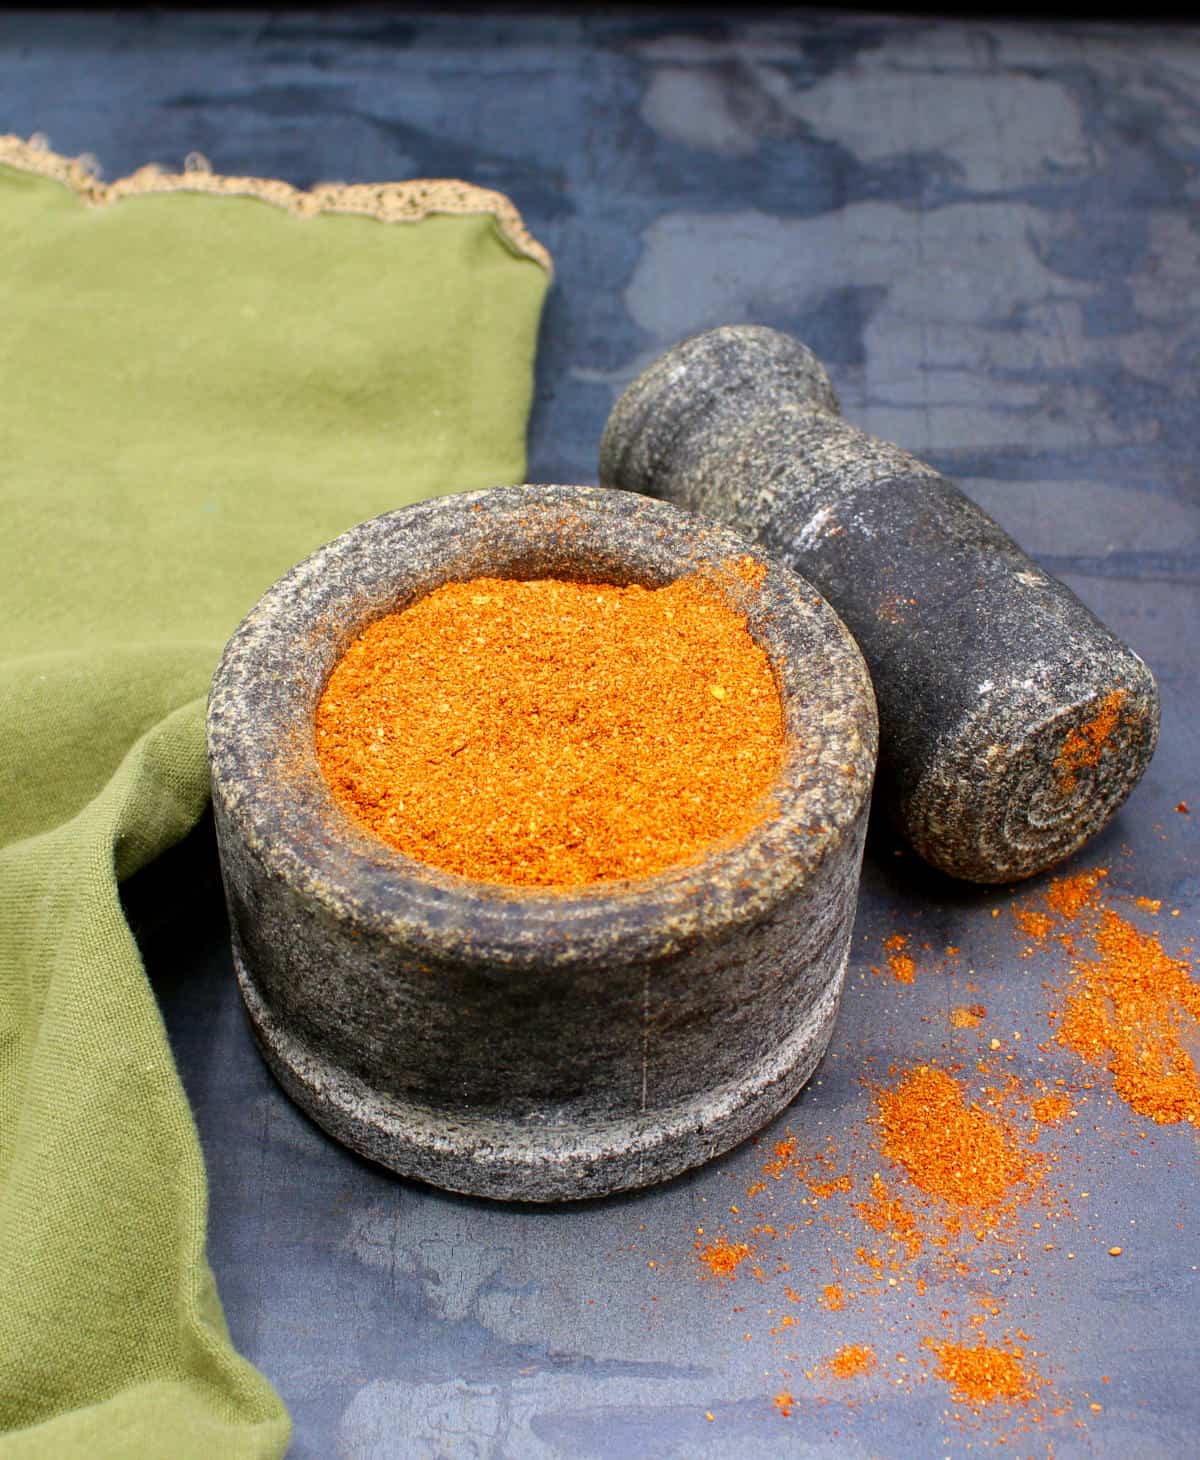 Ethiopian berbere spice in mortar and pestle.